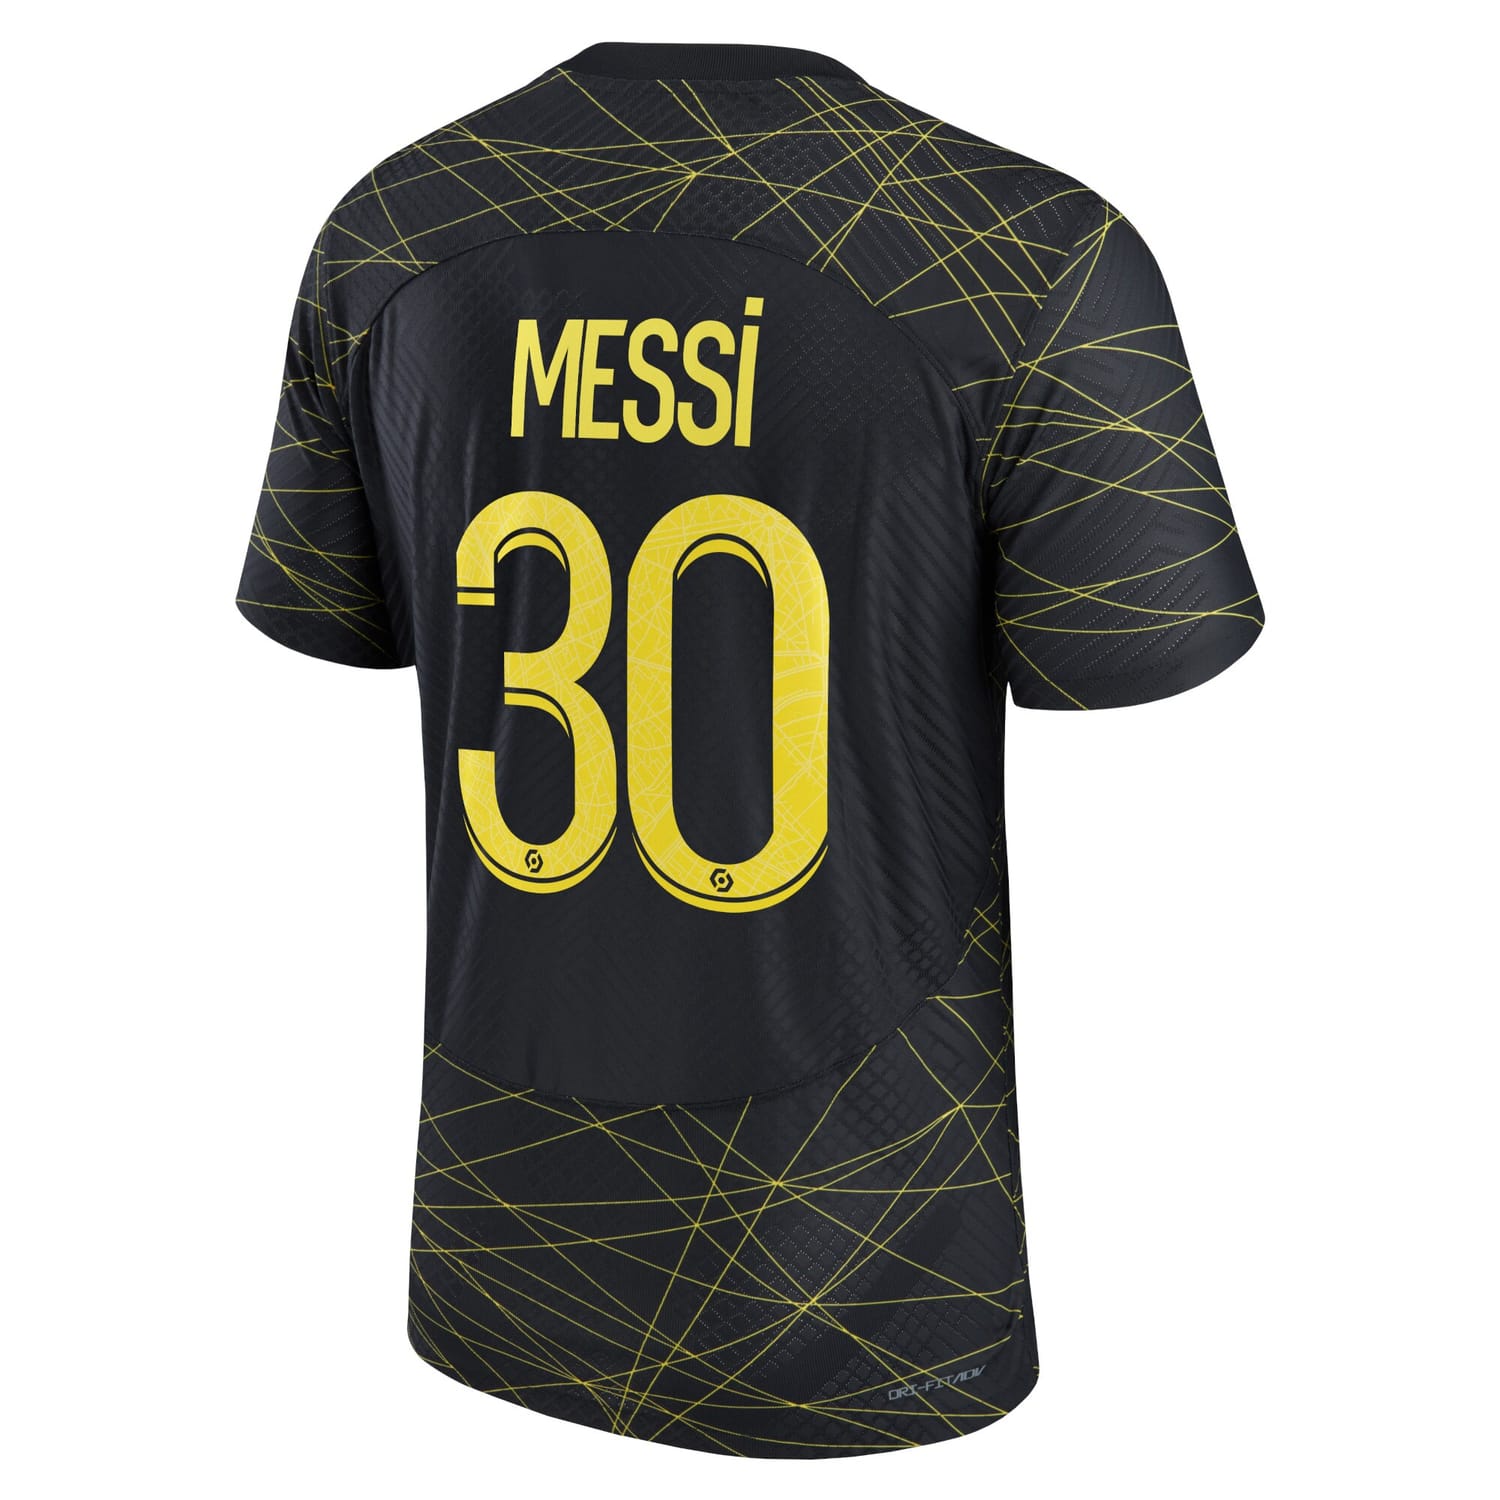 Ligue 1 Paris Saint-Germain Fourth Authentic Jersey Shirt Black 2022-23 player Lionel Messi printing for Men